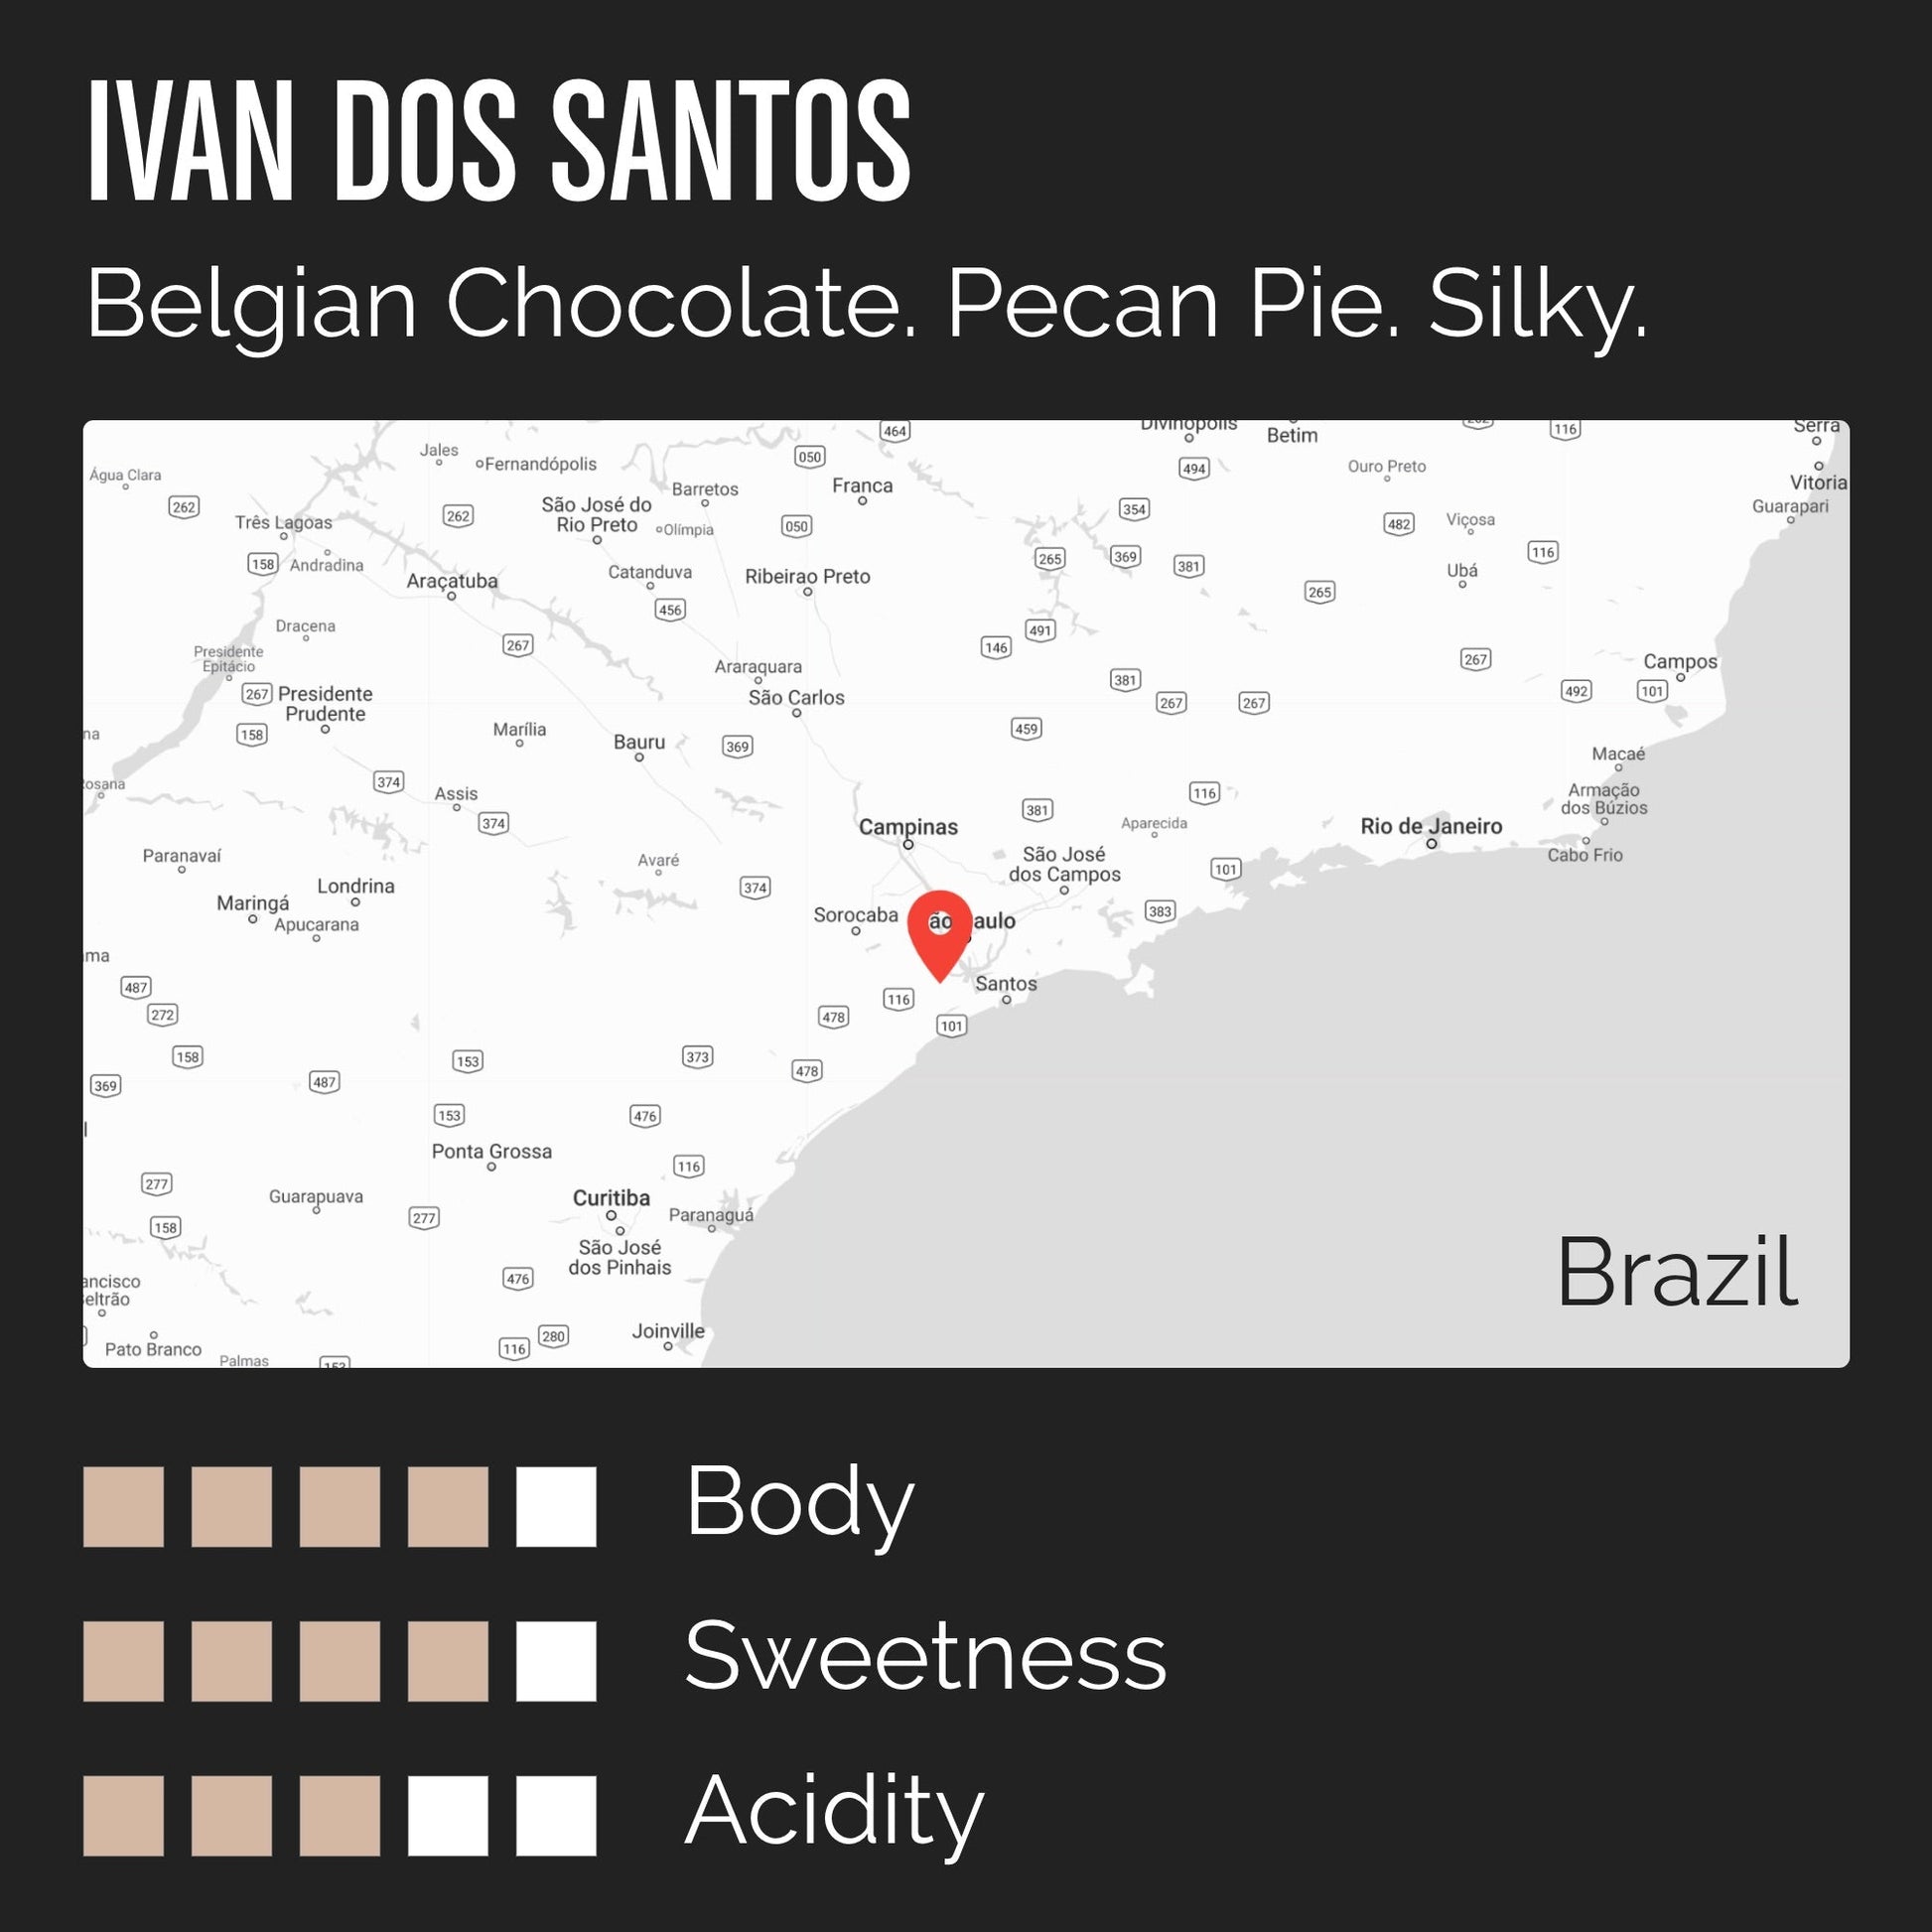 Ivan dos Santos info card with tasting notes: Belgian Chocoalte. Pecan Pie. Silky.